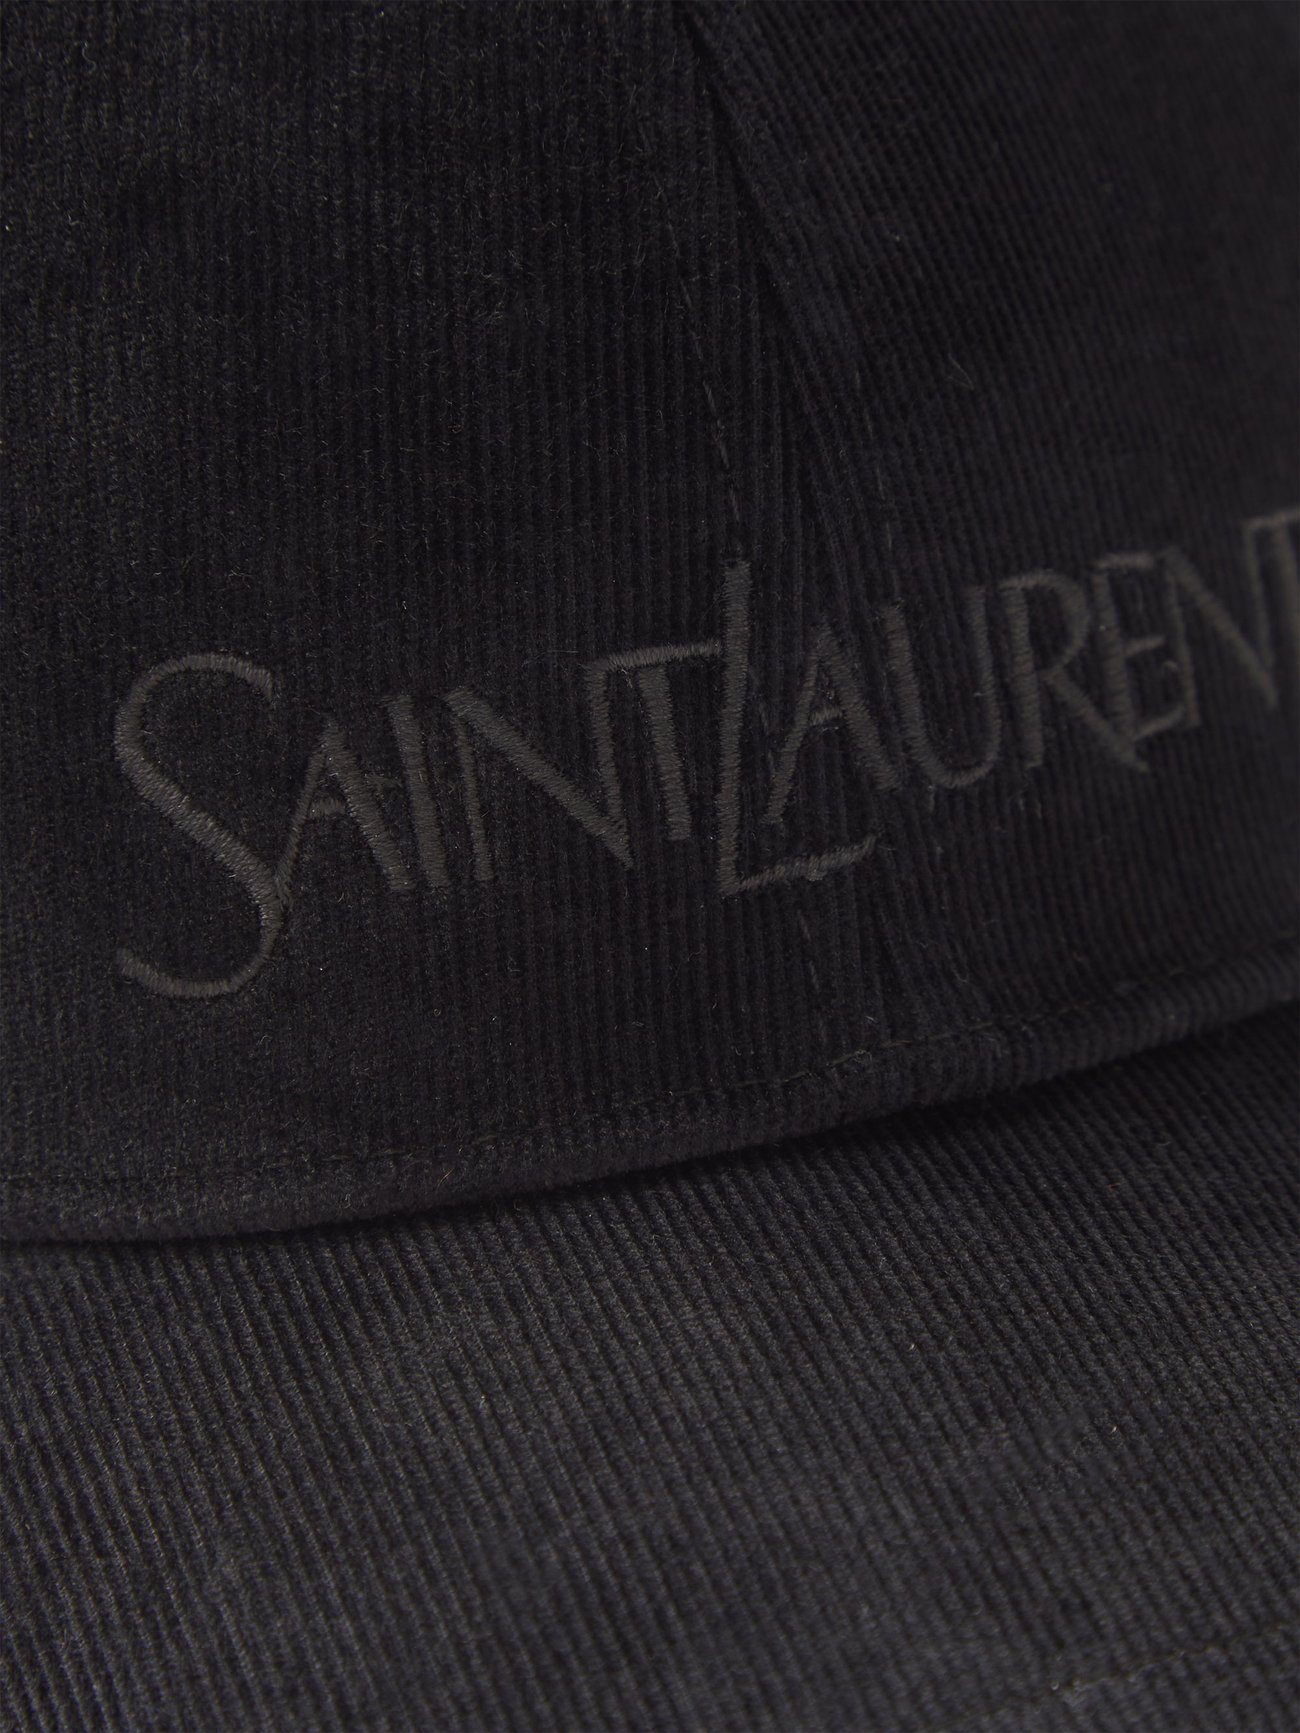 Saint Laurent logo-embroidered Cotton-Cordurory Baseball Cap - Men - Black Hats